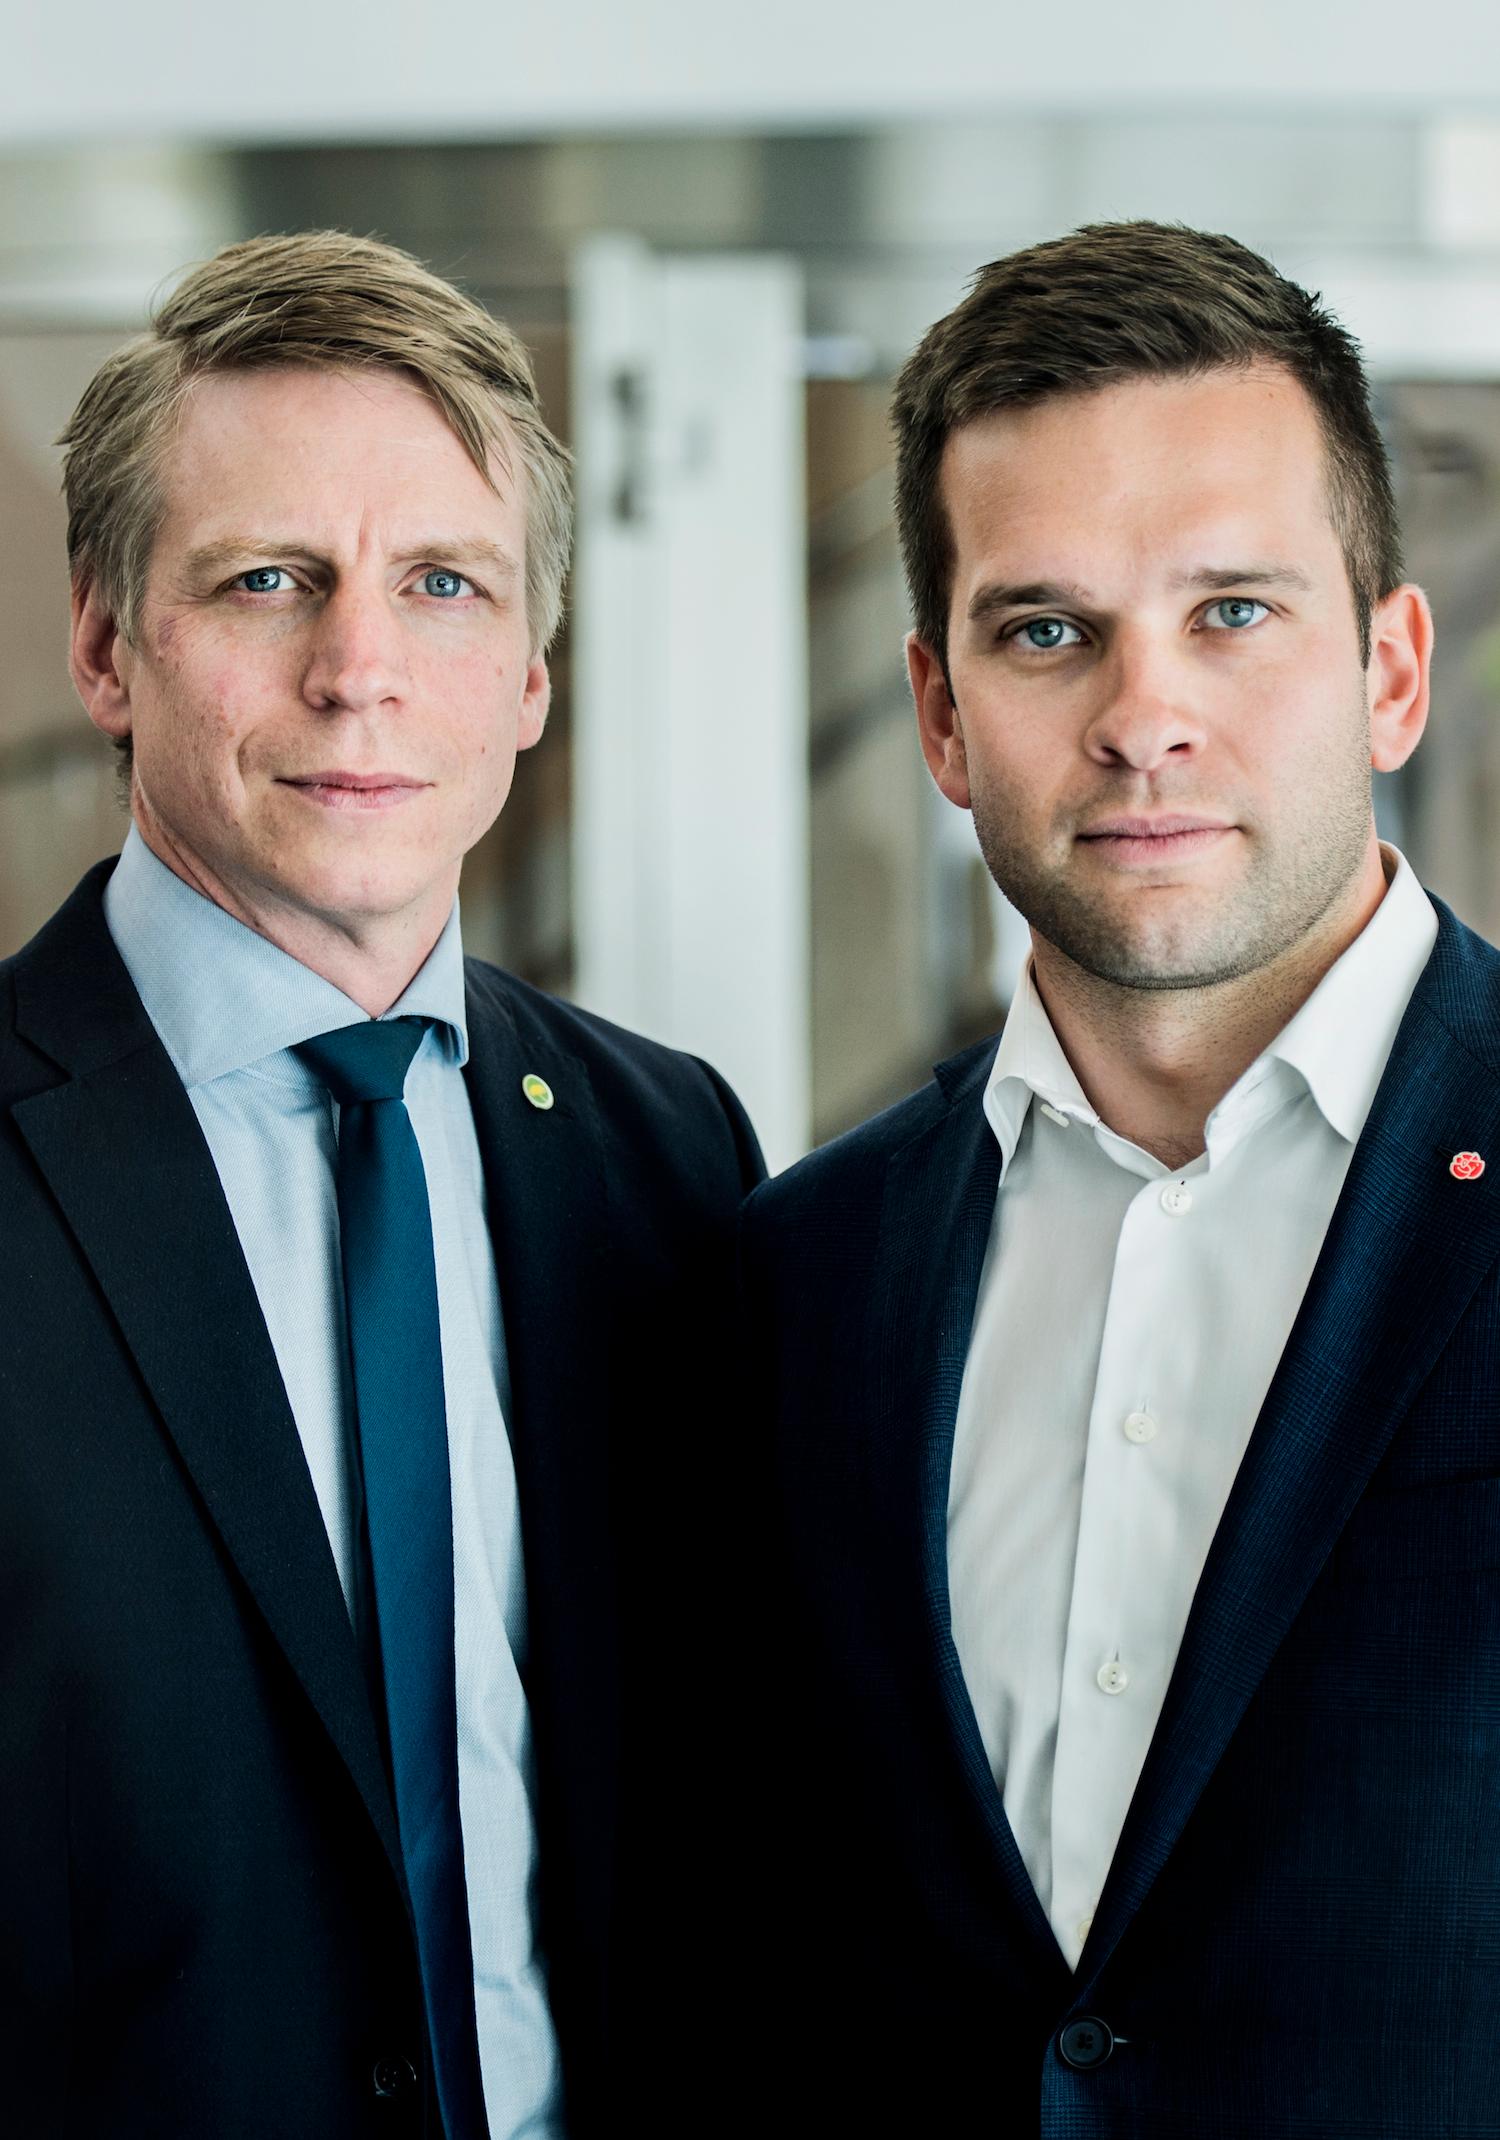 Ministrarna Per Bolund och Gabriel Wikström